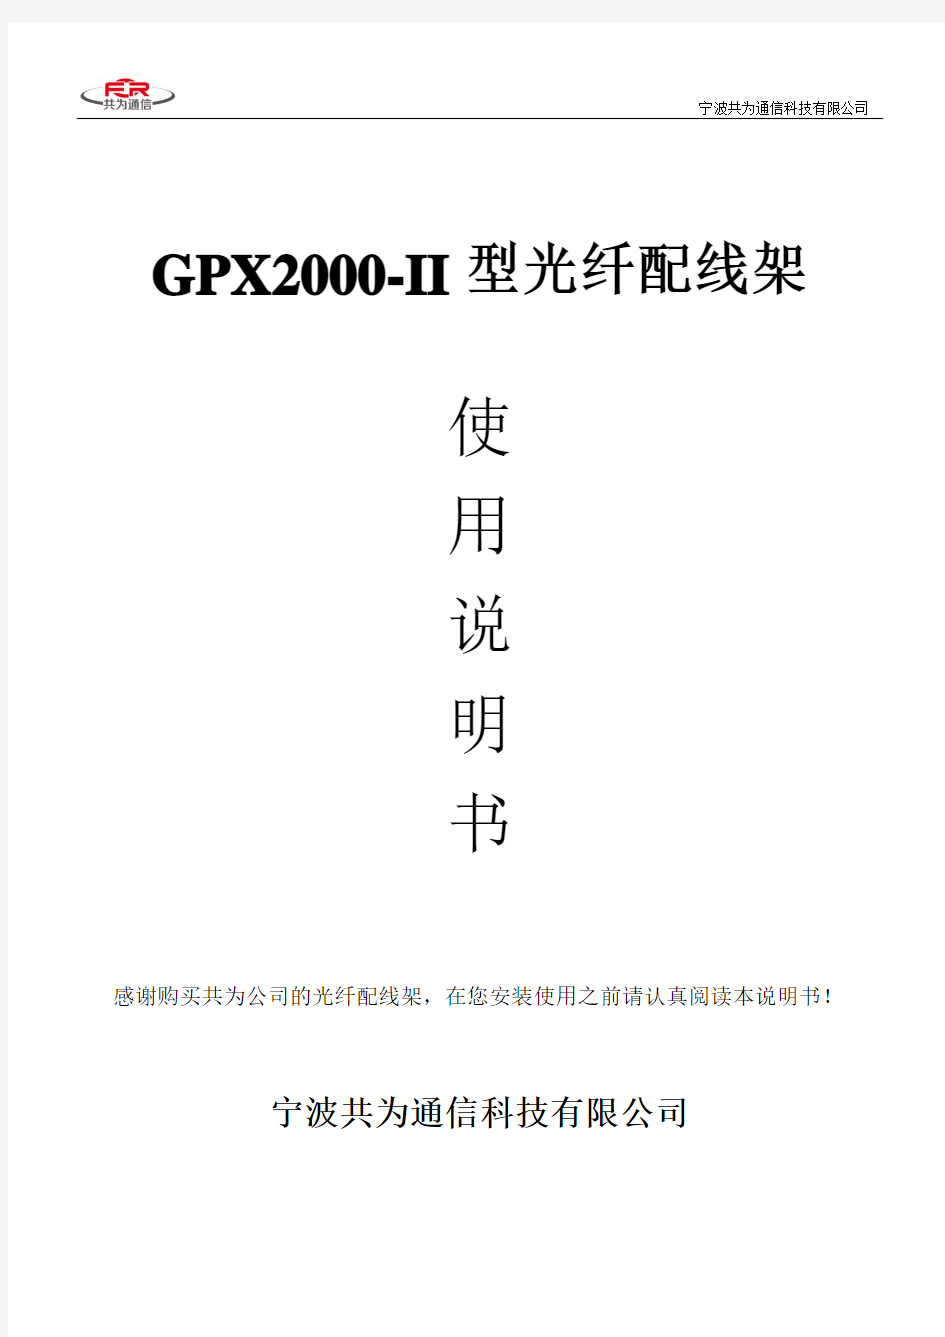 GPX2000-II型光纤配线架使用说明(共为)